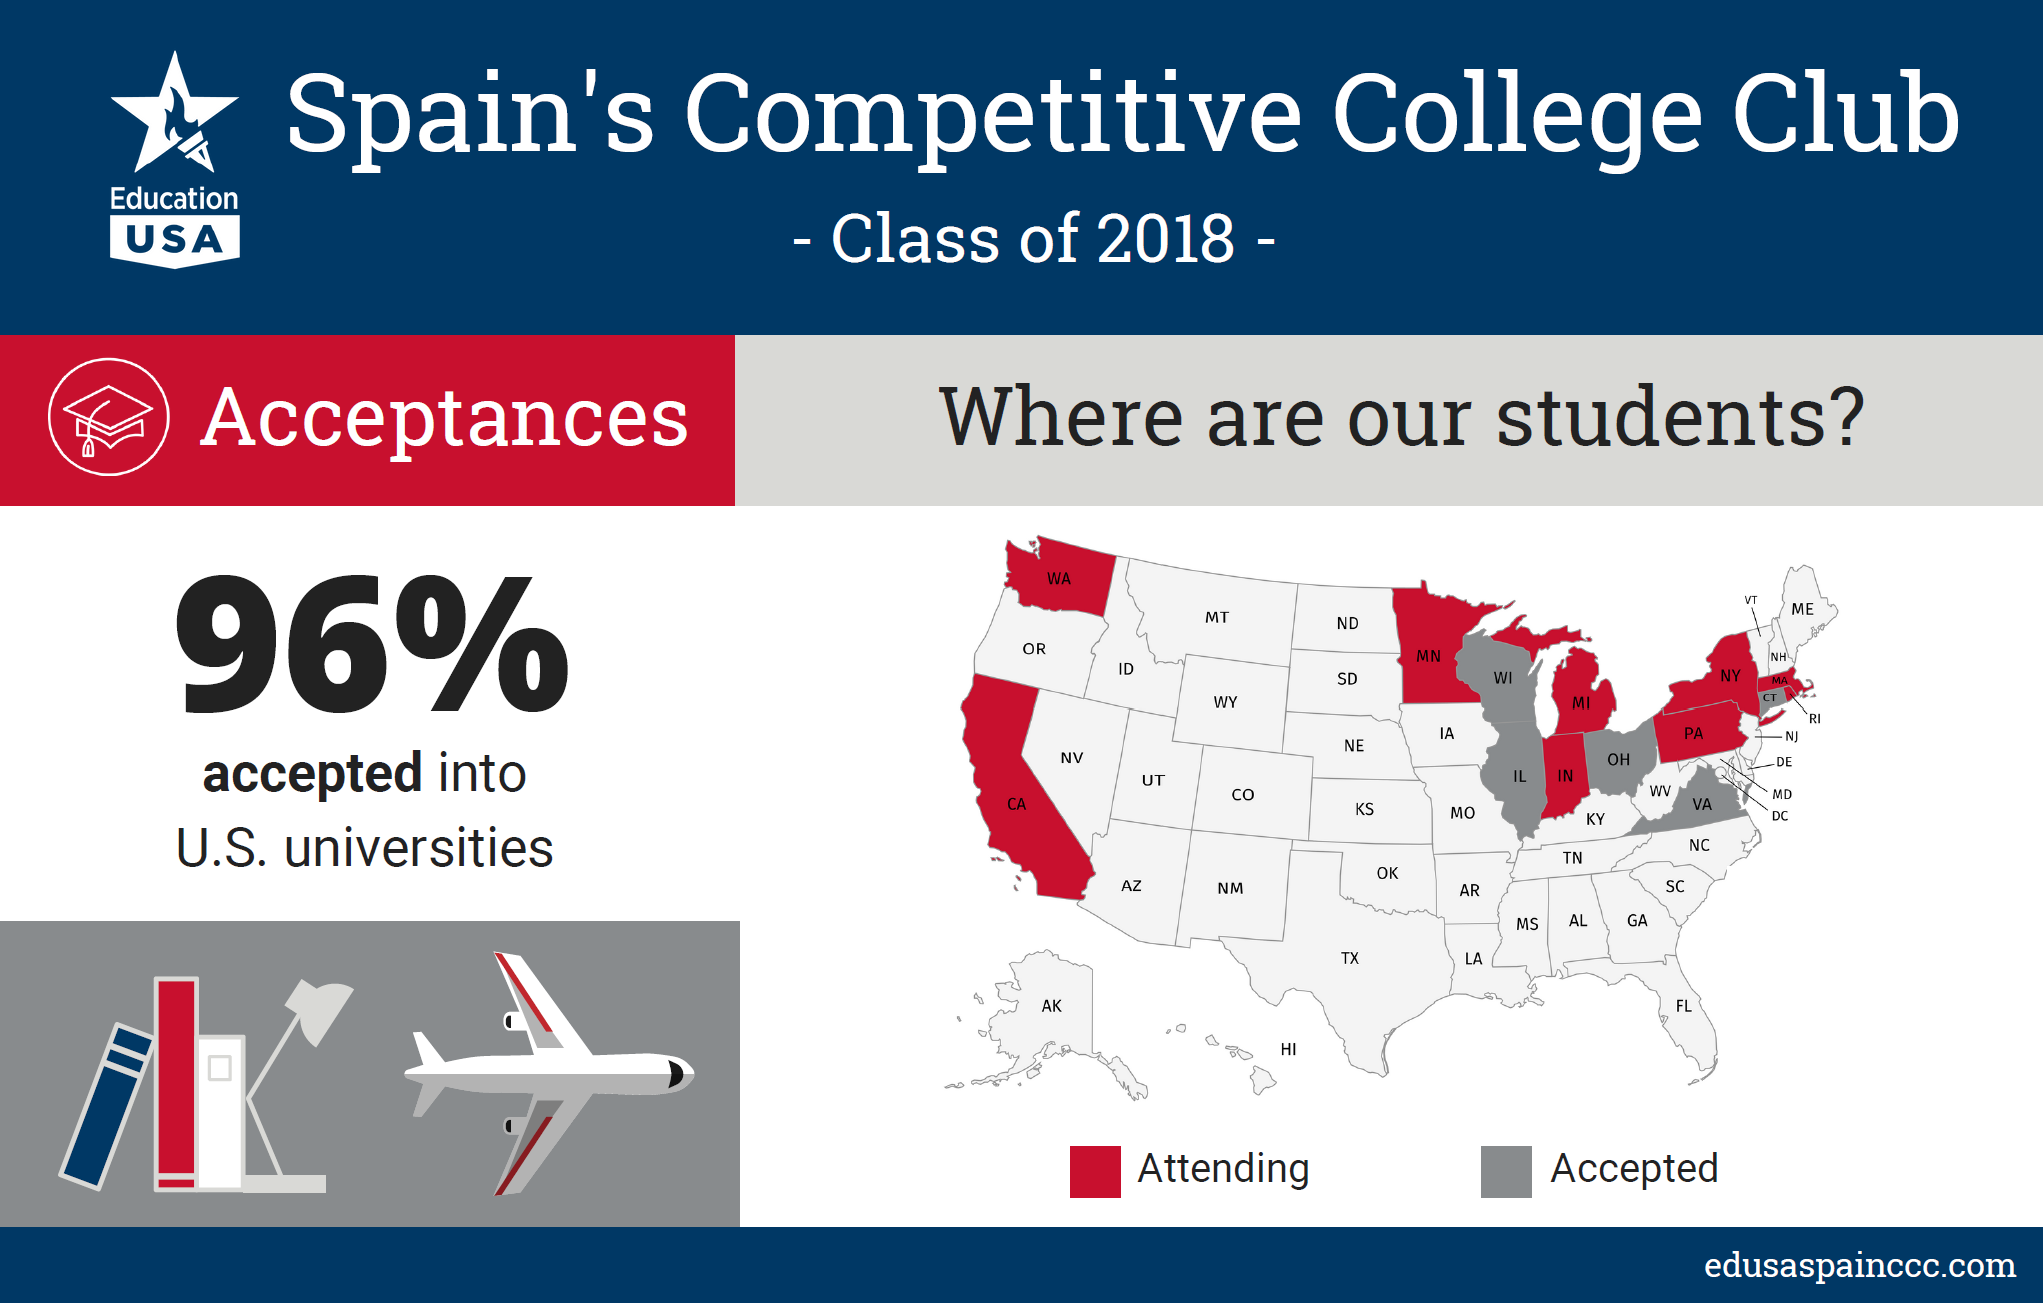 EducationUSA Spain's Competitve College Club Class of 2018 Results